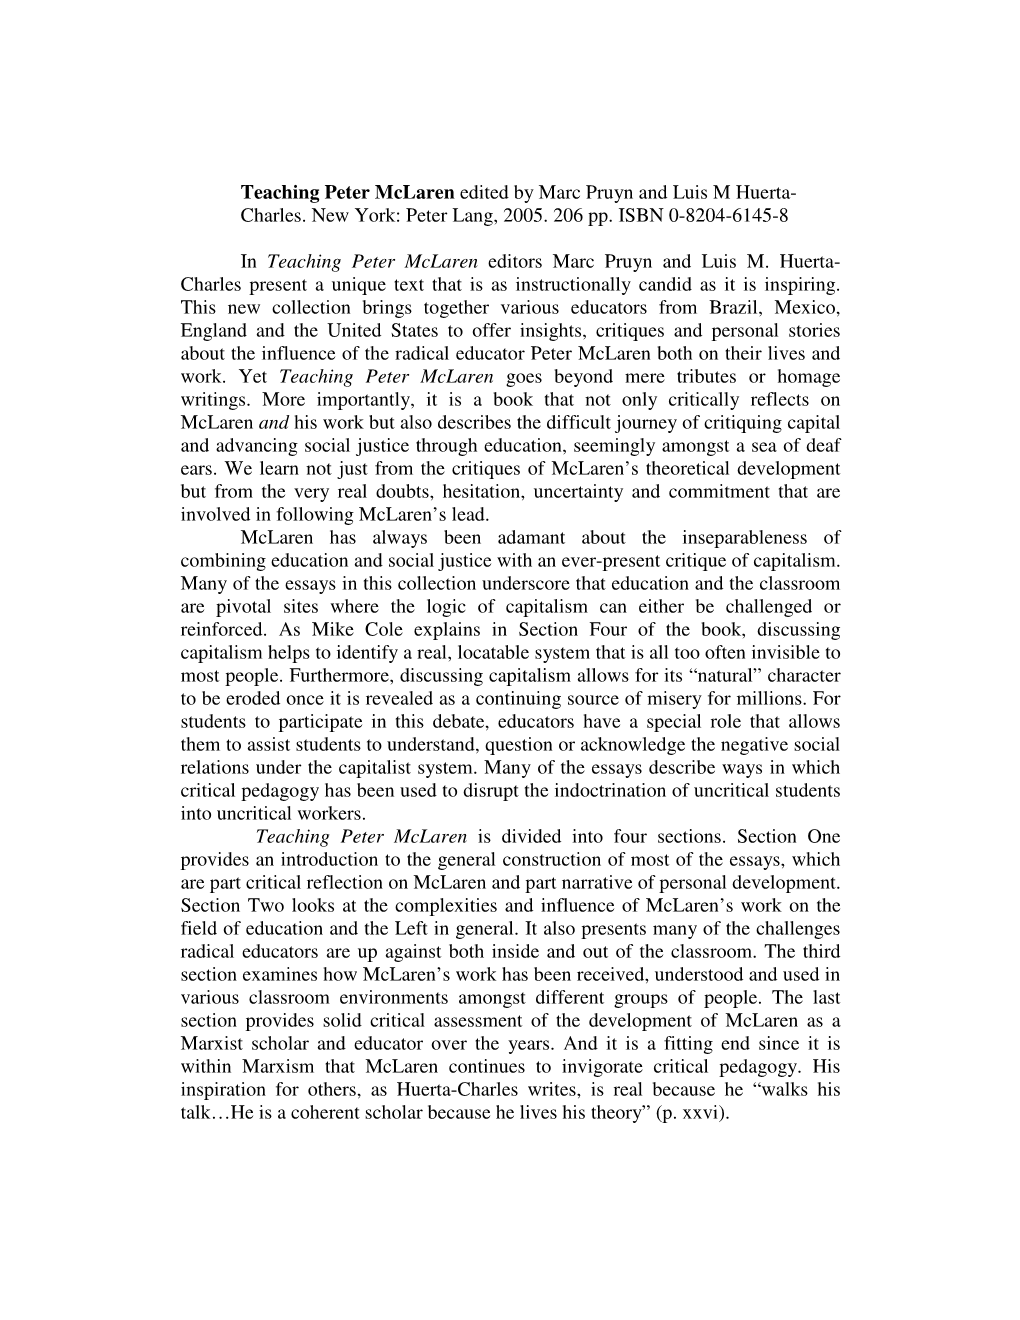 Teaching Peter Mclaren Edited by Marc Pruyn and Luis M. Huerta-Charles